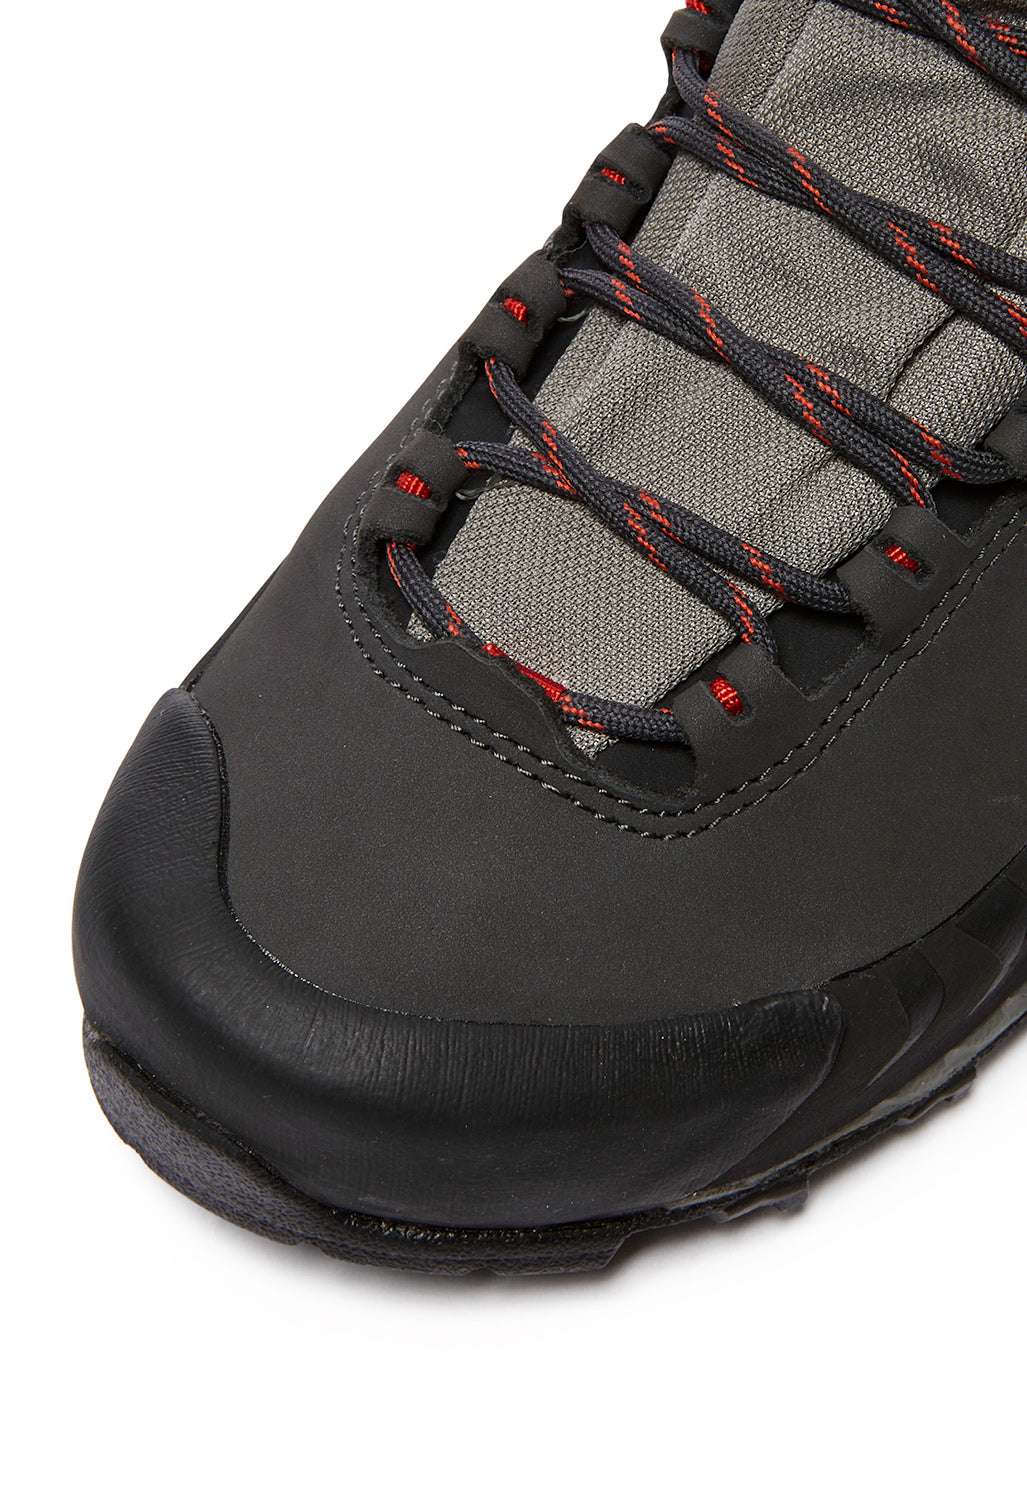 La Sportiva TX5 GORE-TEX Women's Boots - Carbon/Paprika